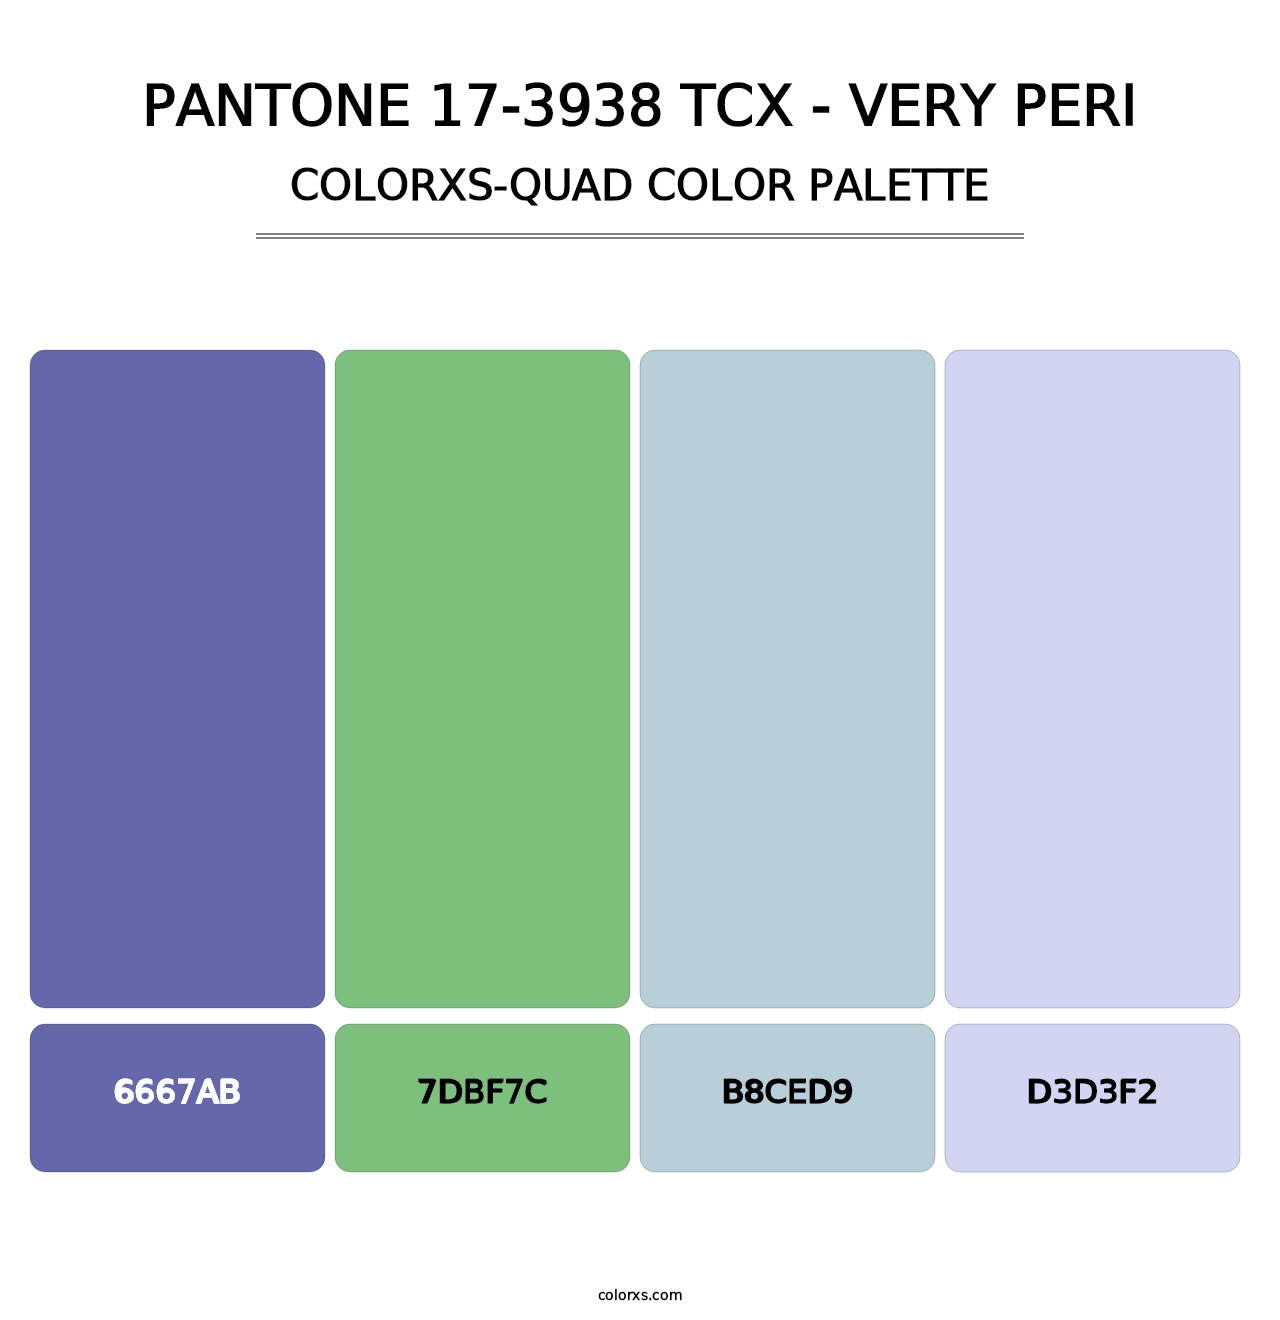 PANTONE 17-3938 TCX - Very Peri - Colorxs Quad Palette